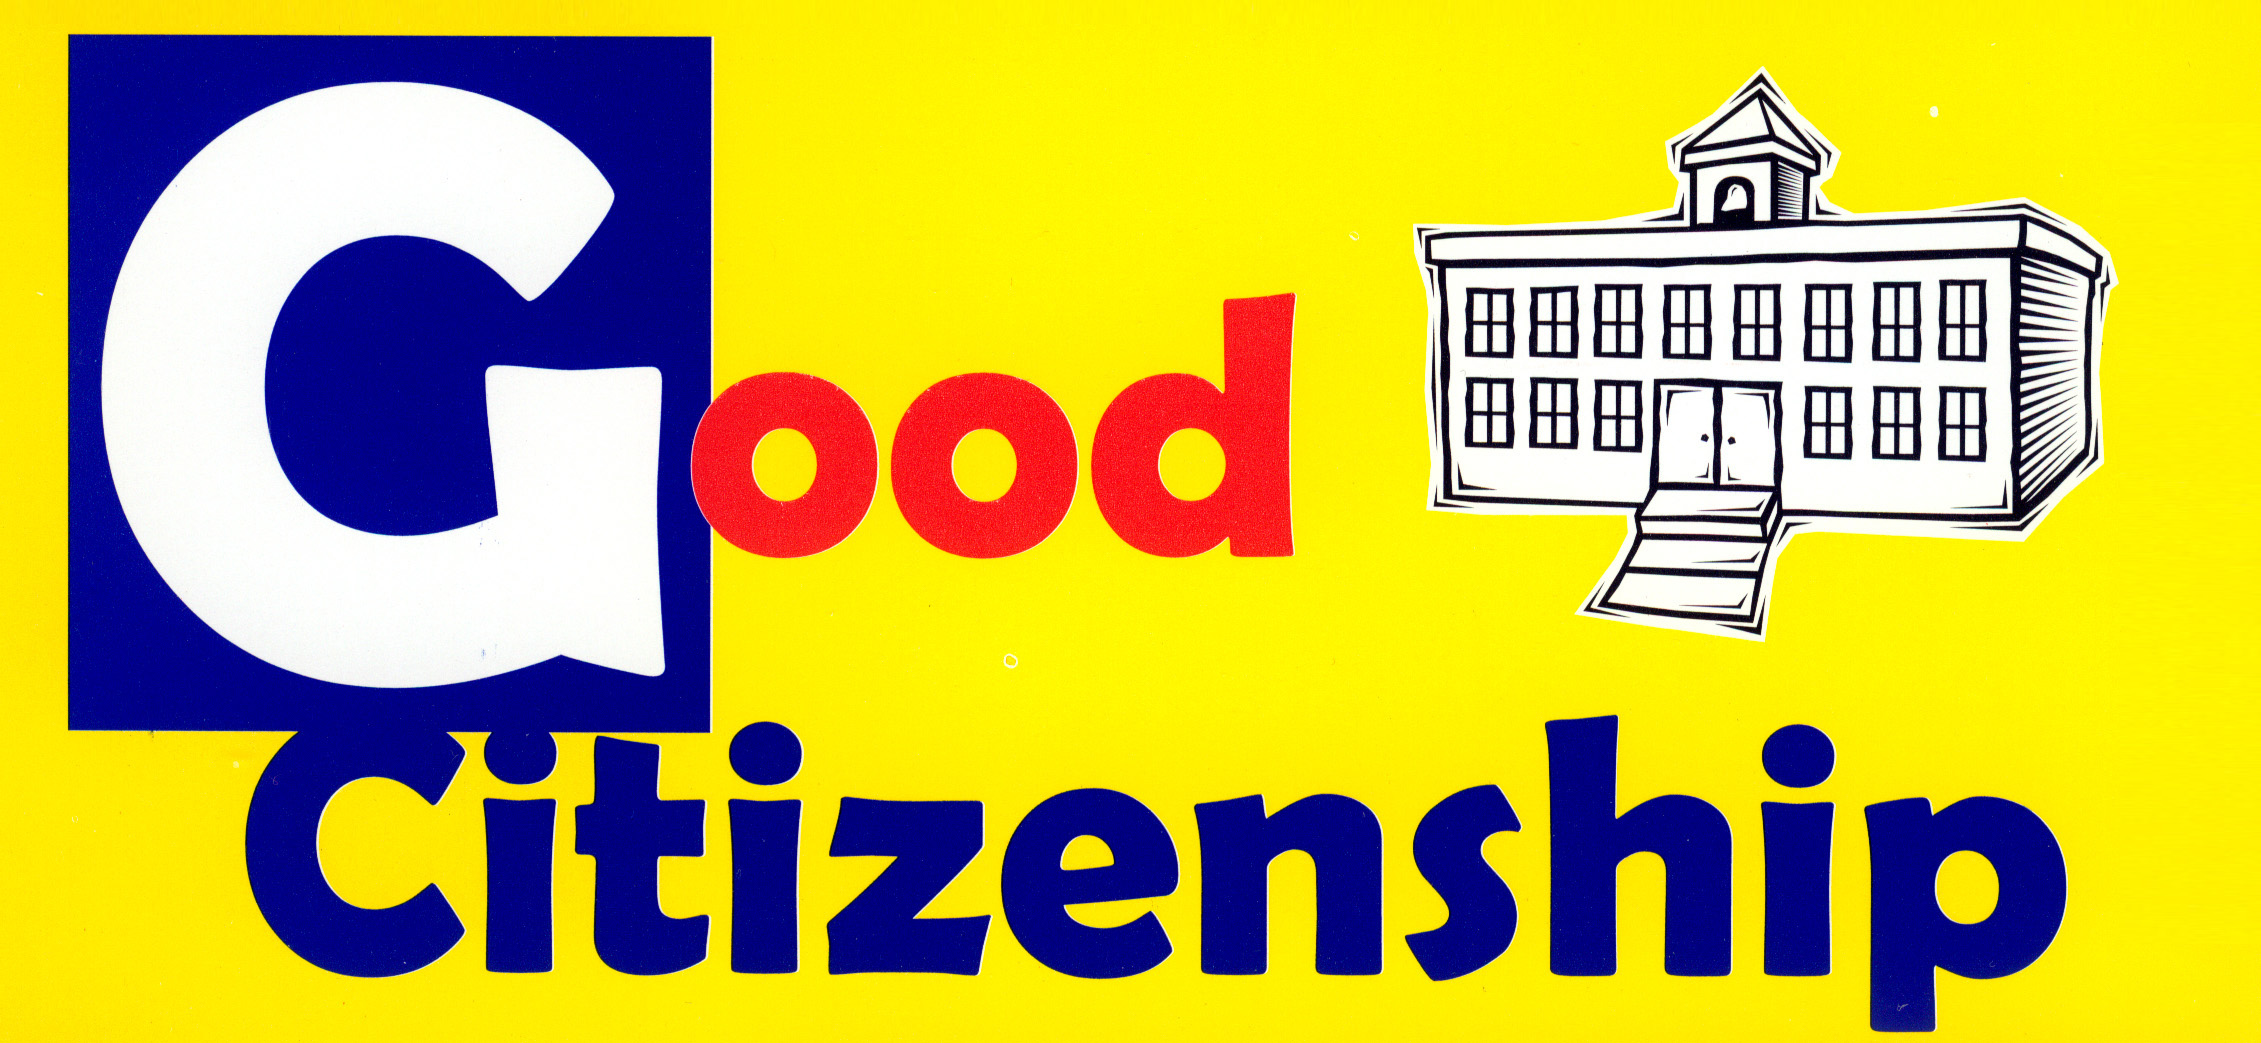 good citizenship clipart - photo #8